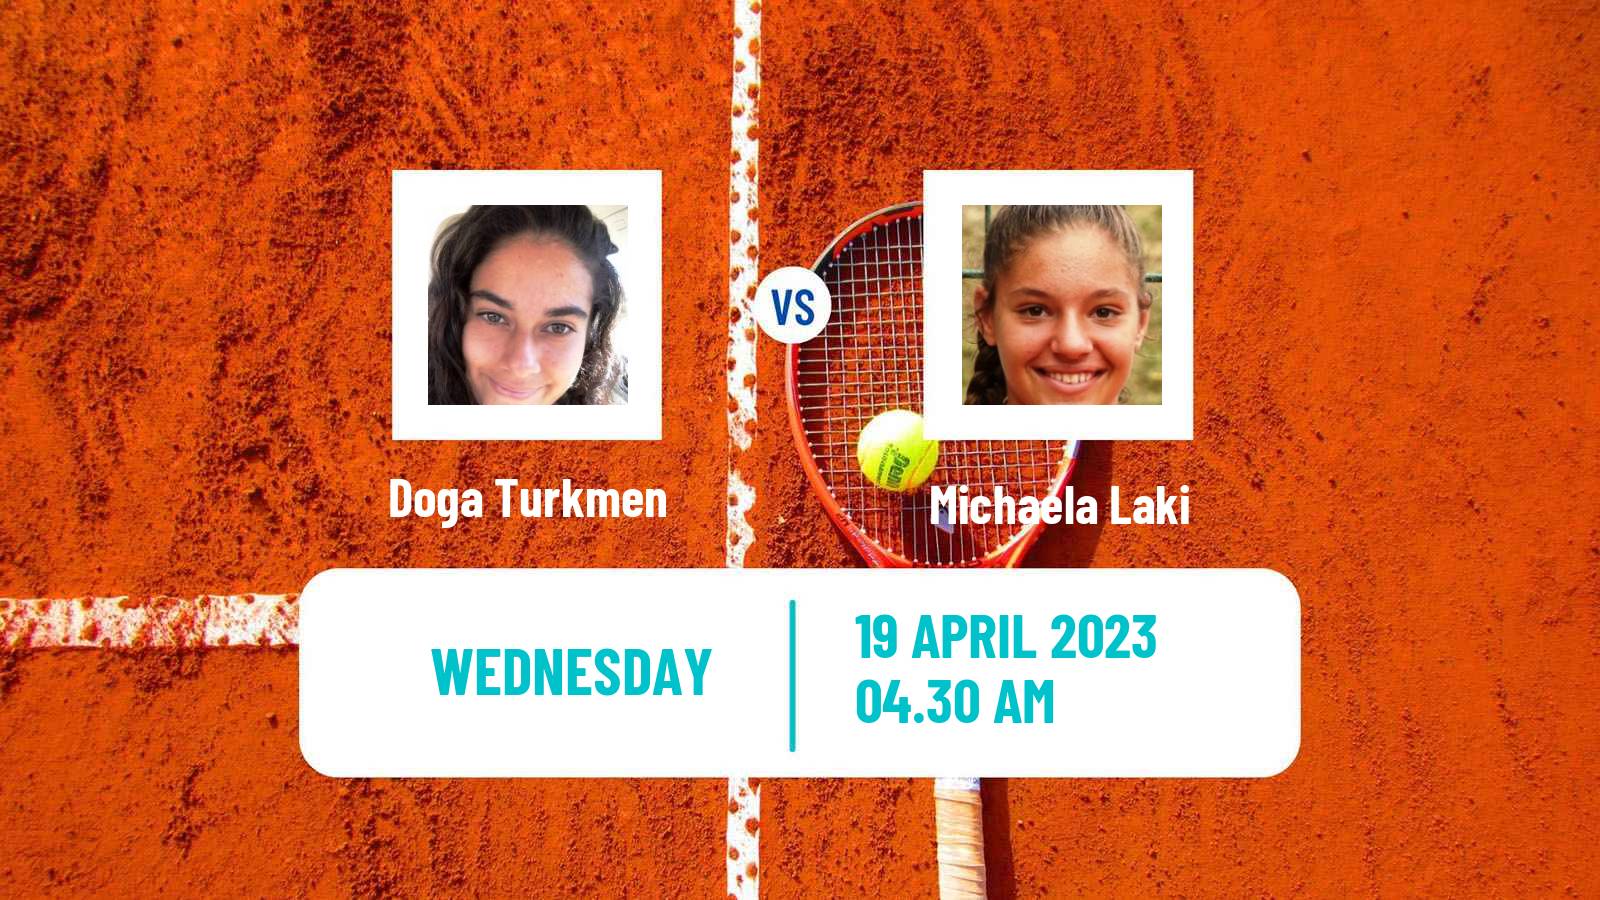 Tennis ITF Tournaments Doga Turkmen - Michaela Laki